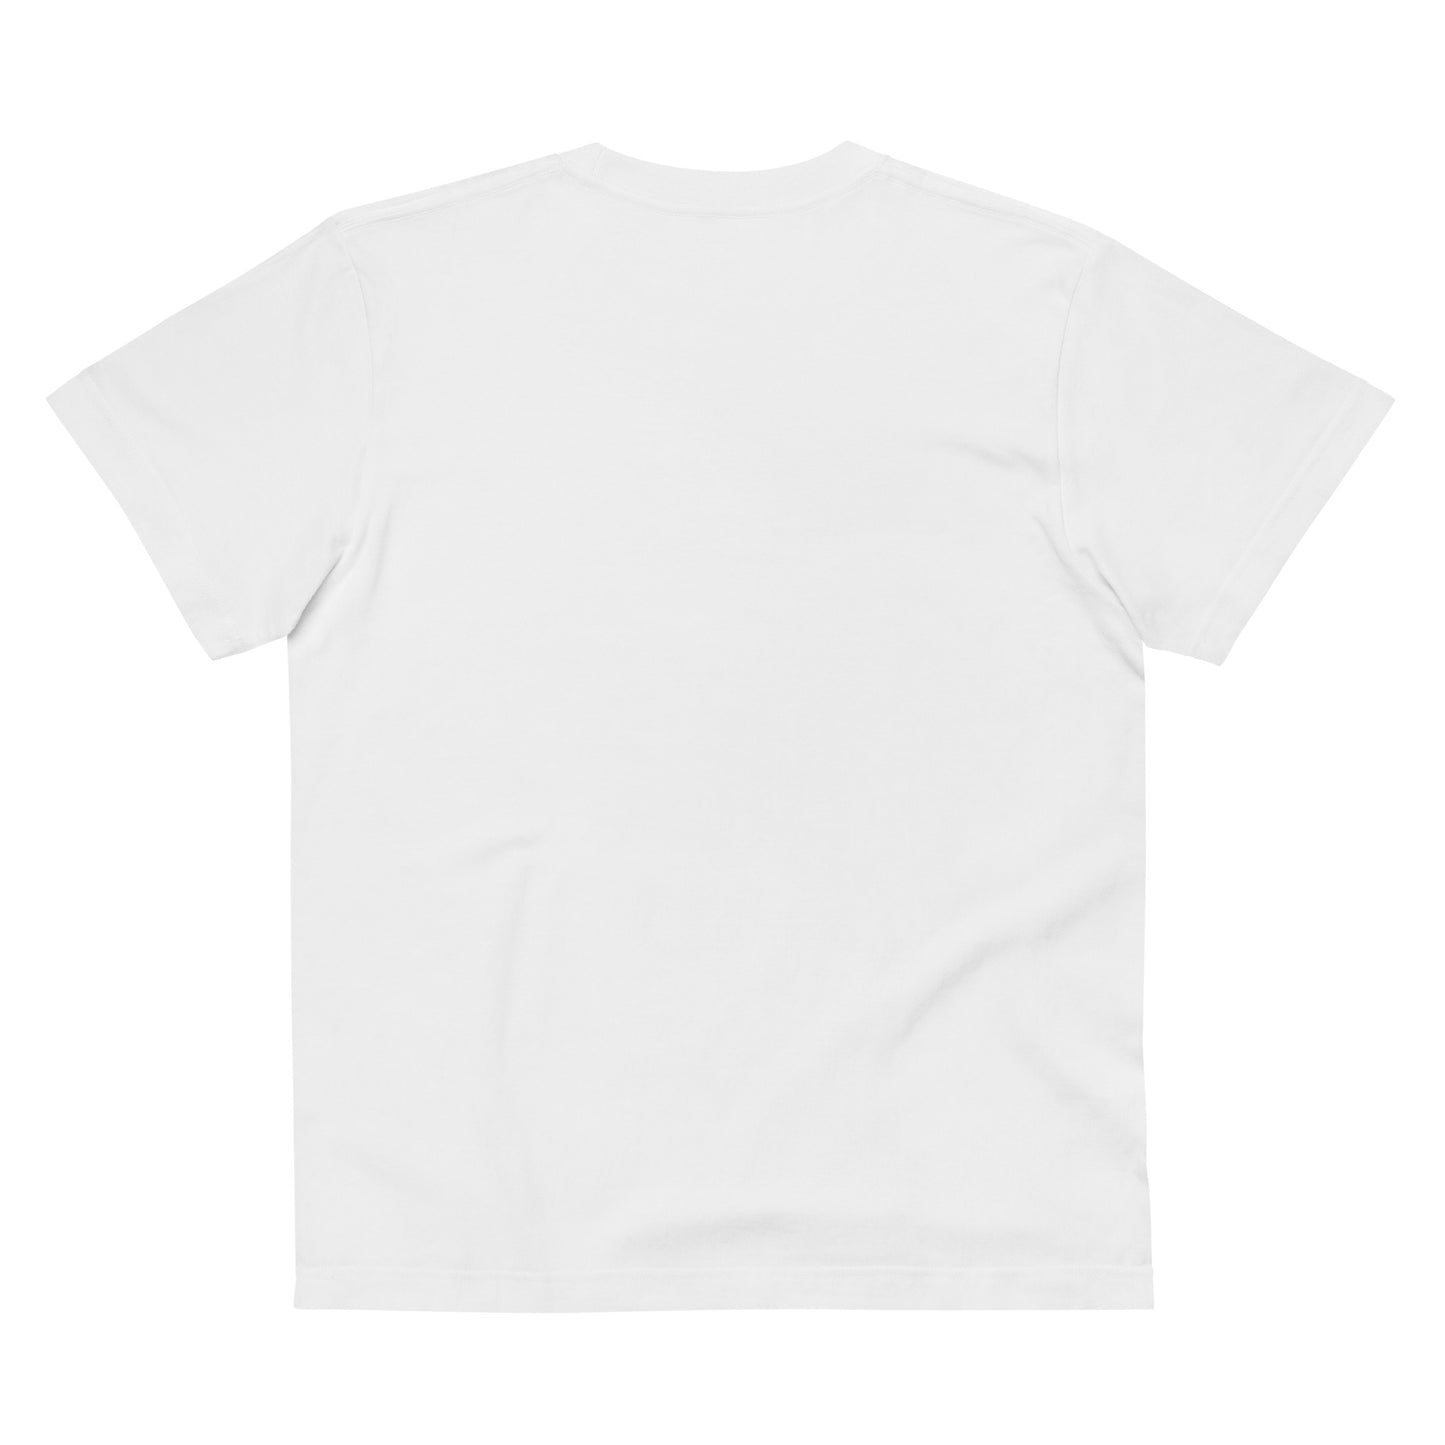 E036 - Kaos/Bentuk standar (Kemenangan MX : Putih/Hitam)